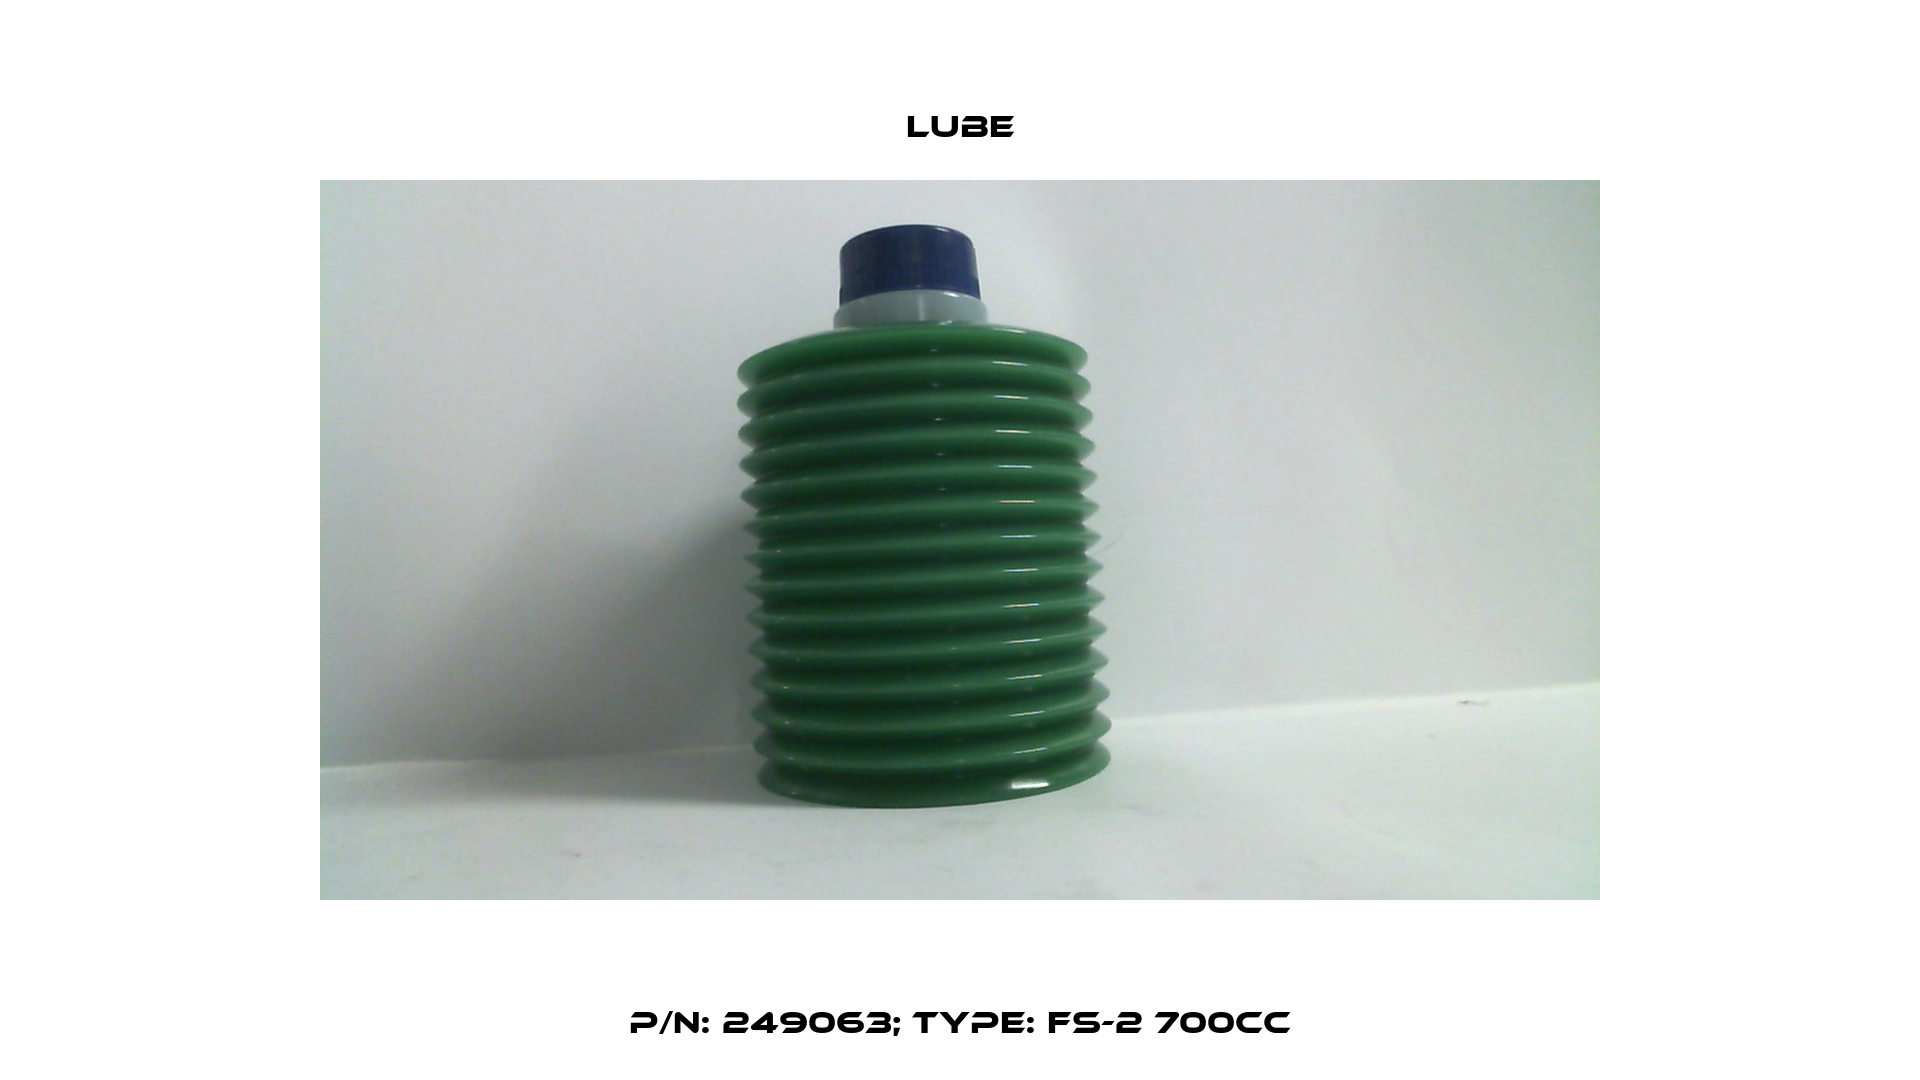 p/n: 249063; Type: FS-2 700cc Lube